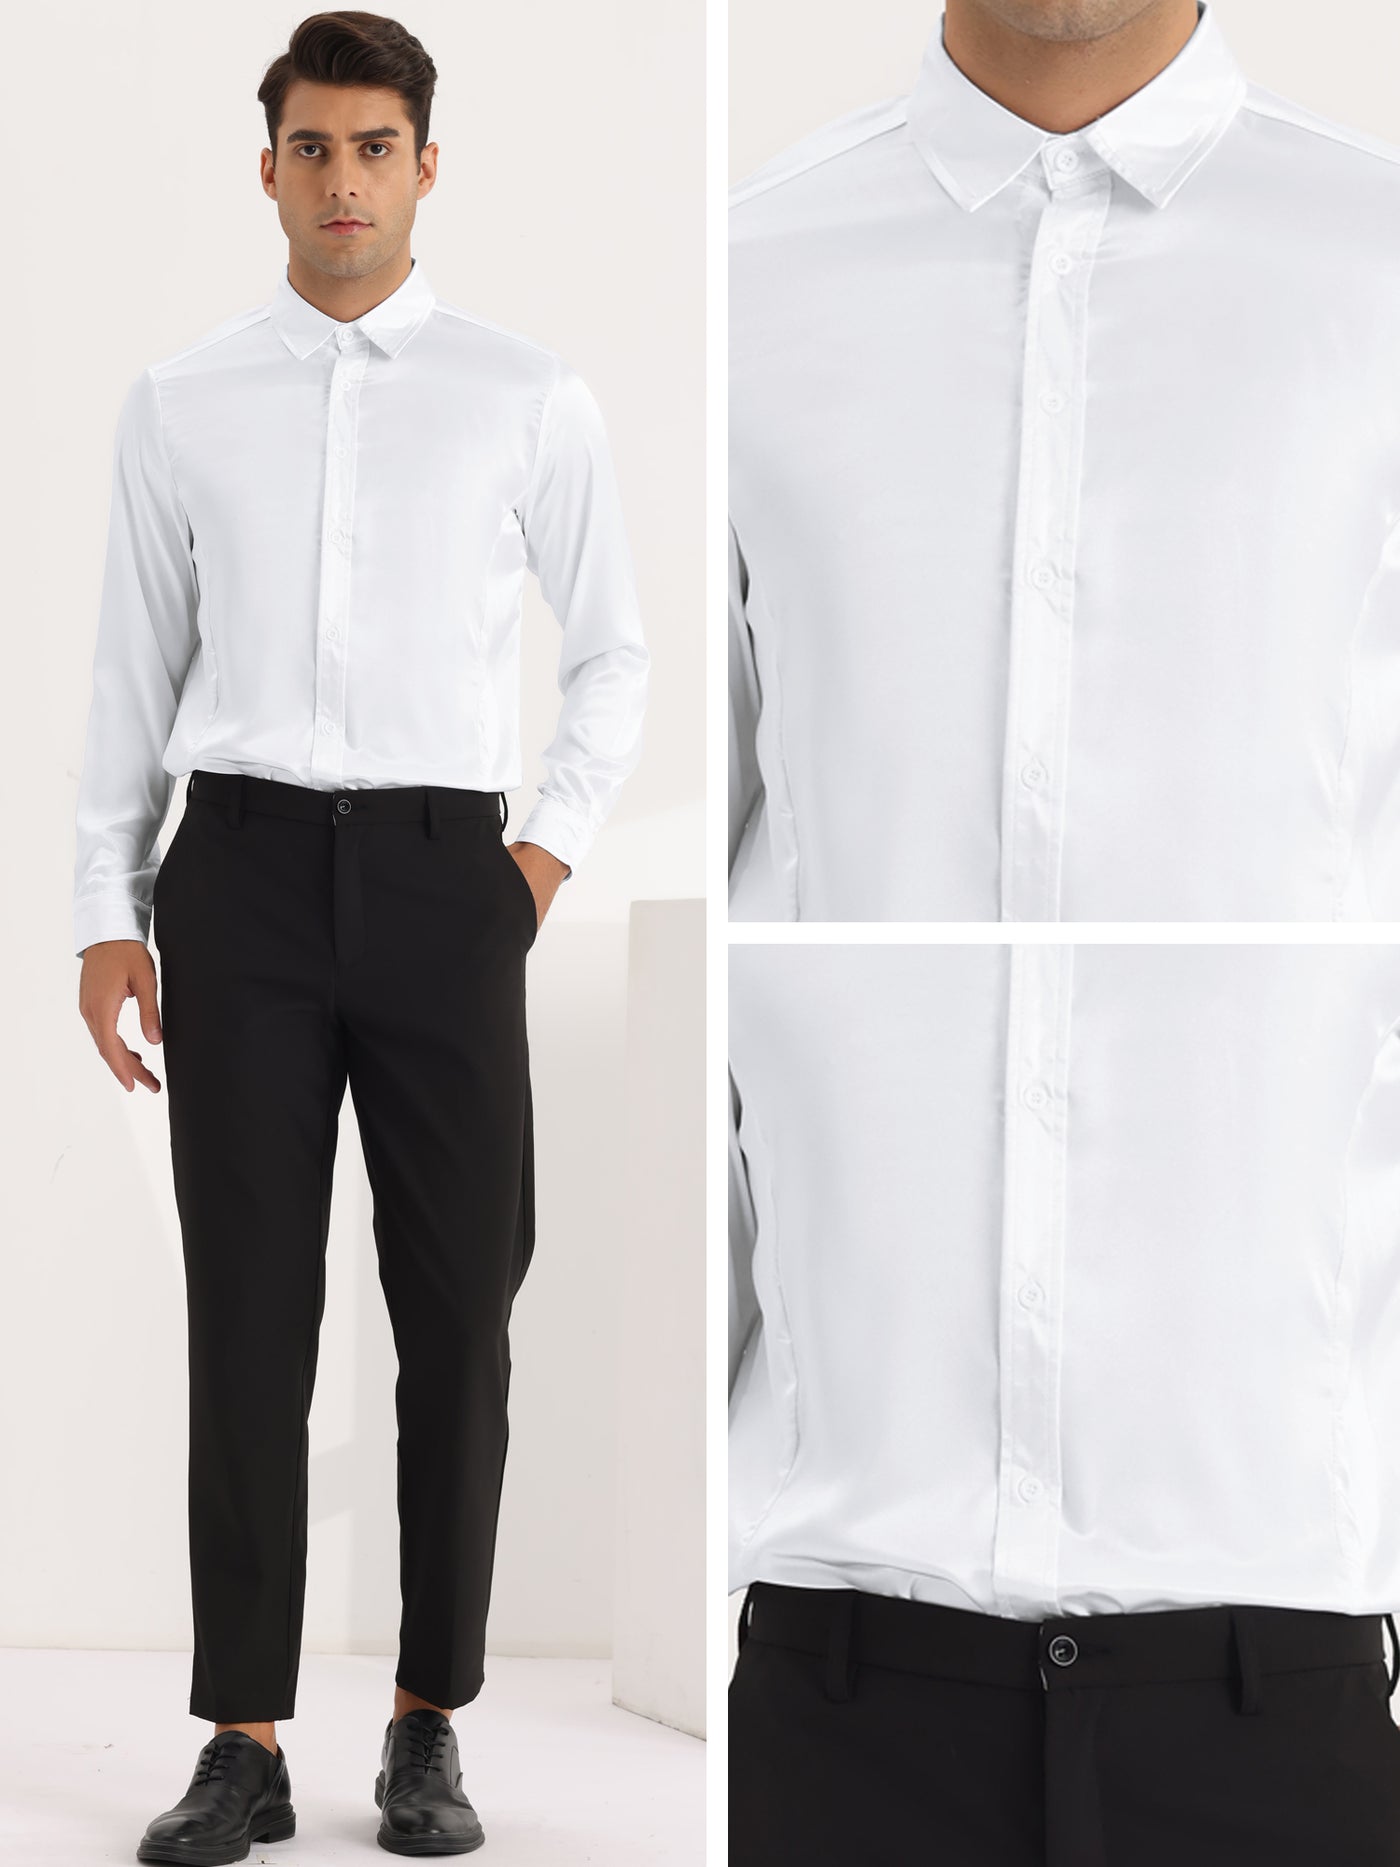 Bublédon Men's Slim Fit Long Sleeves Button Down Prom Dress Shirts